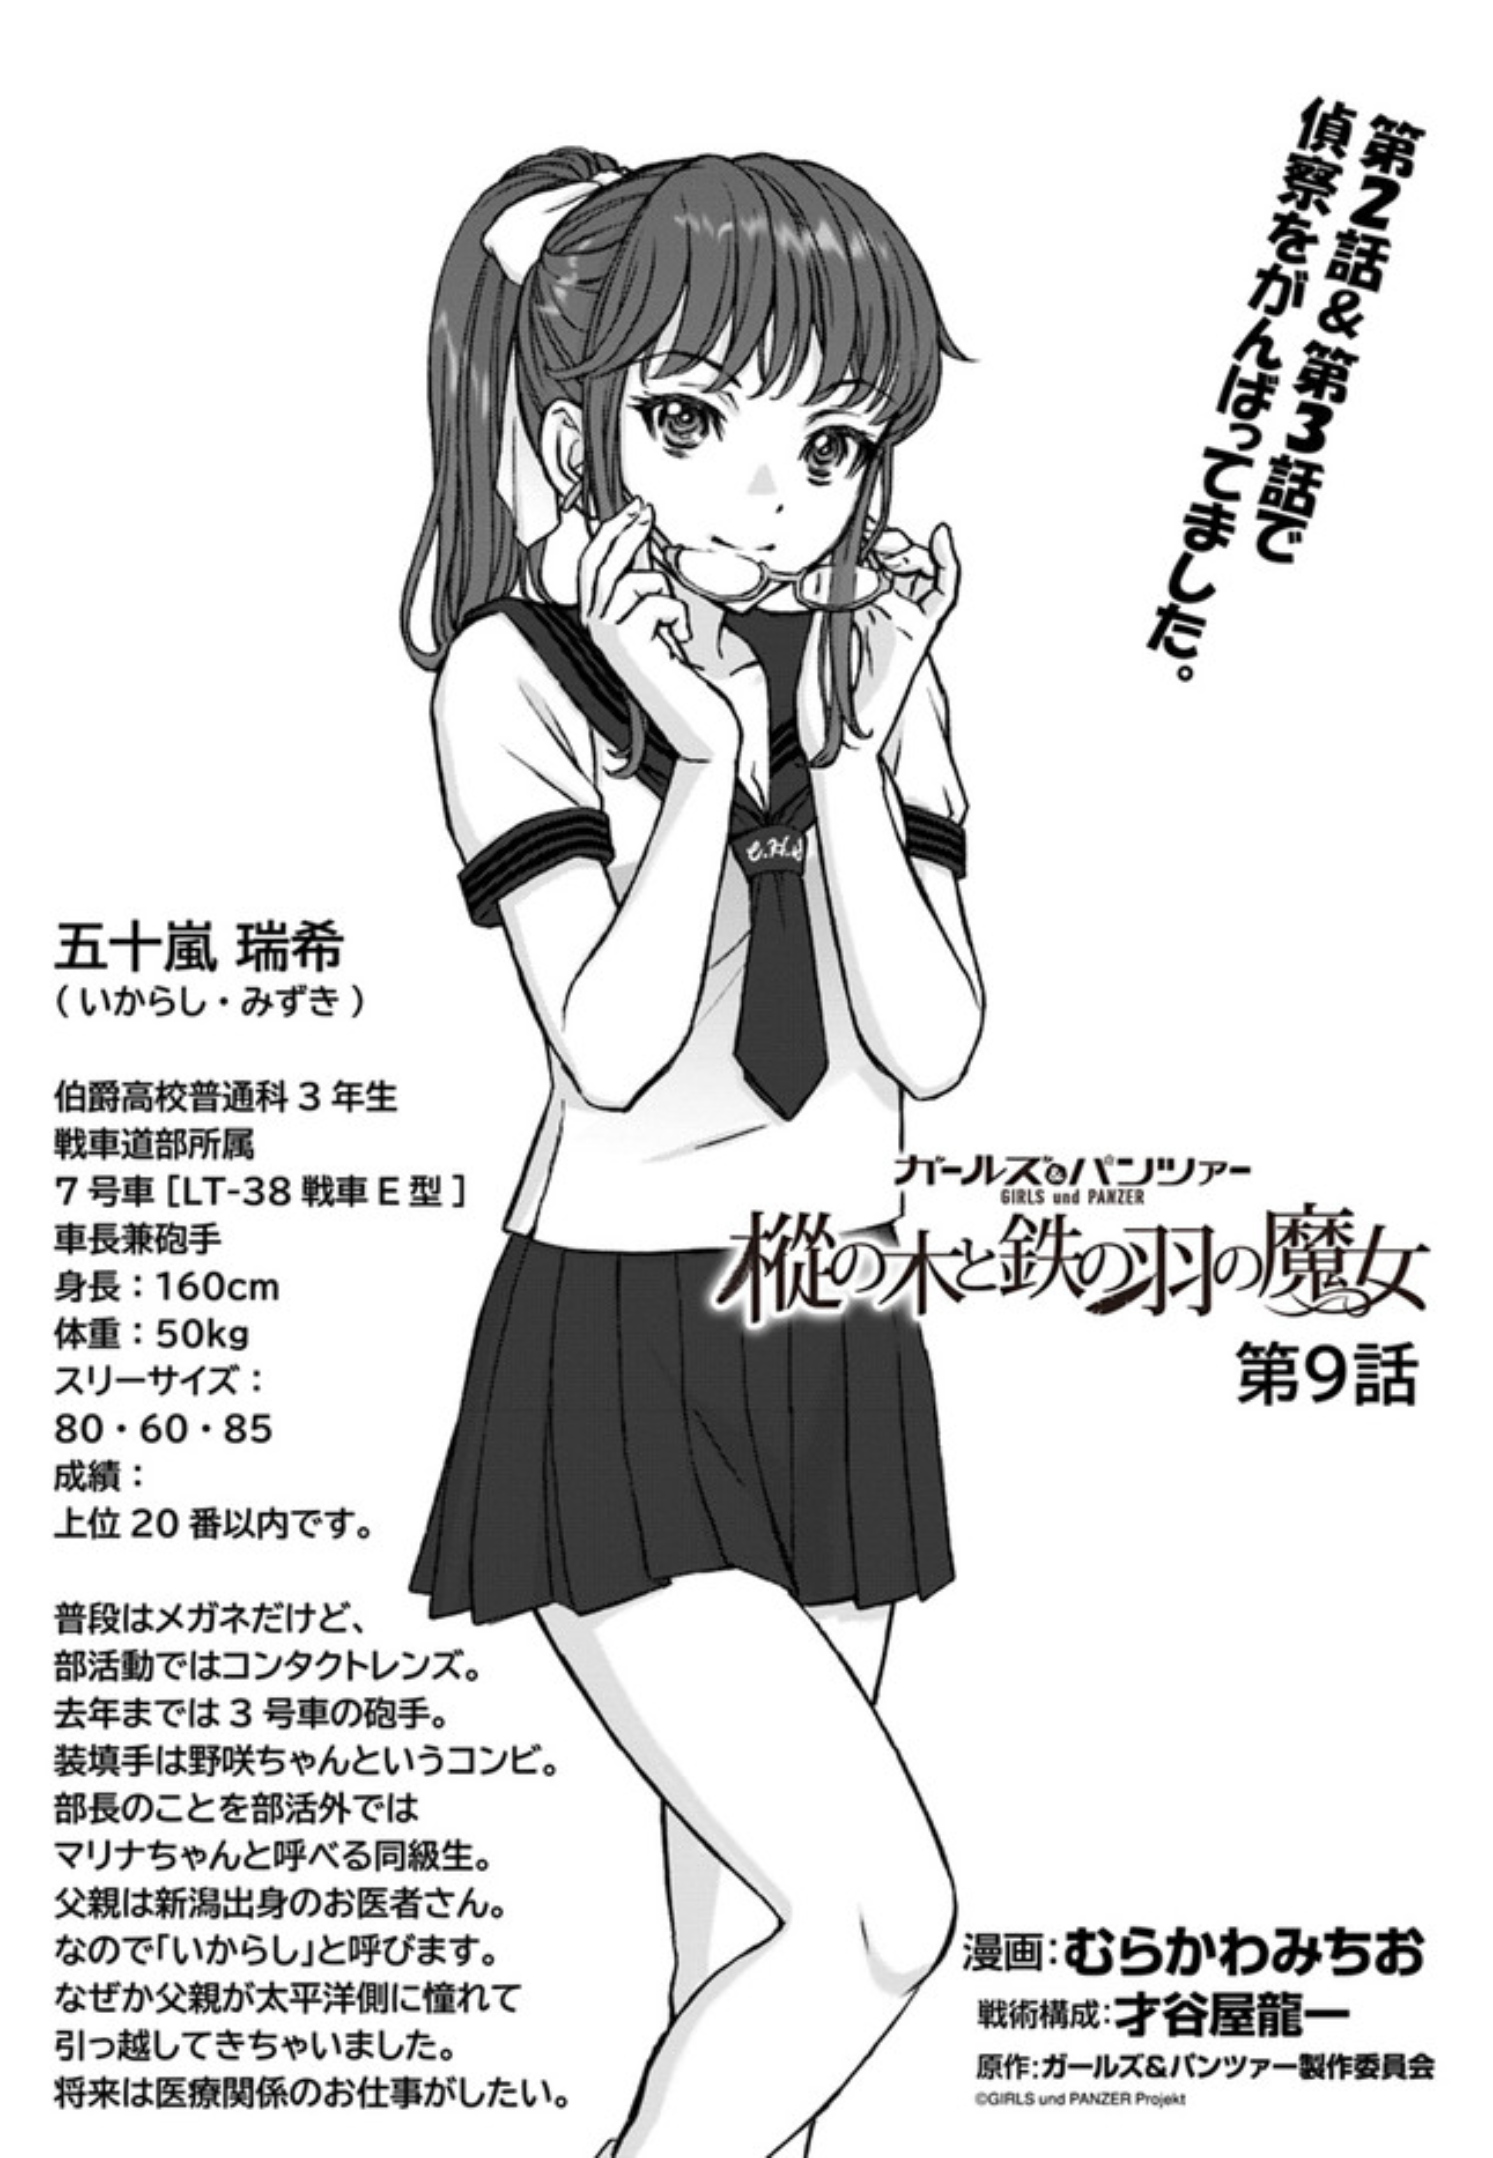 Mizuki Ikarashi Gallery Girls Und Panzer Wiki Fandom